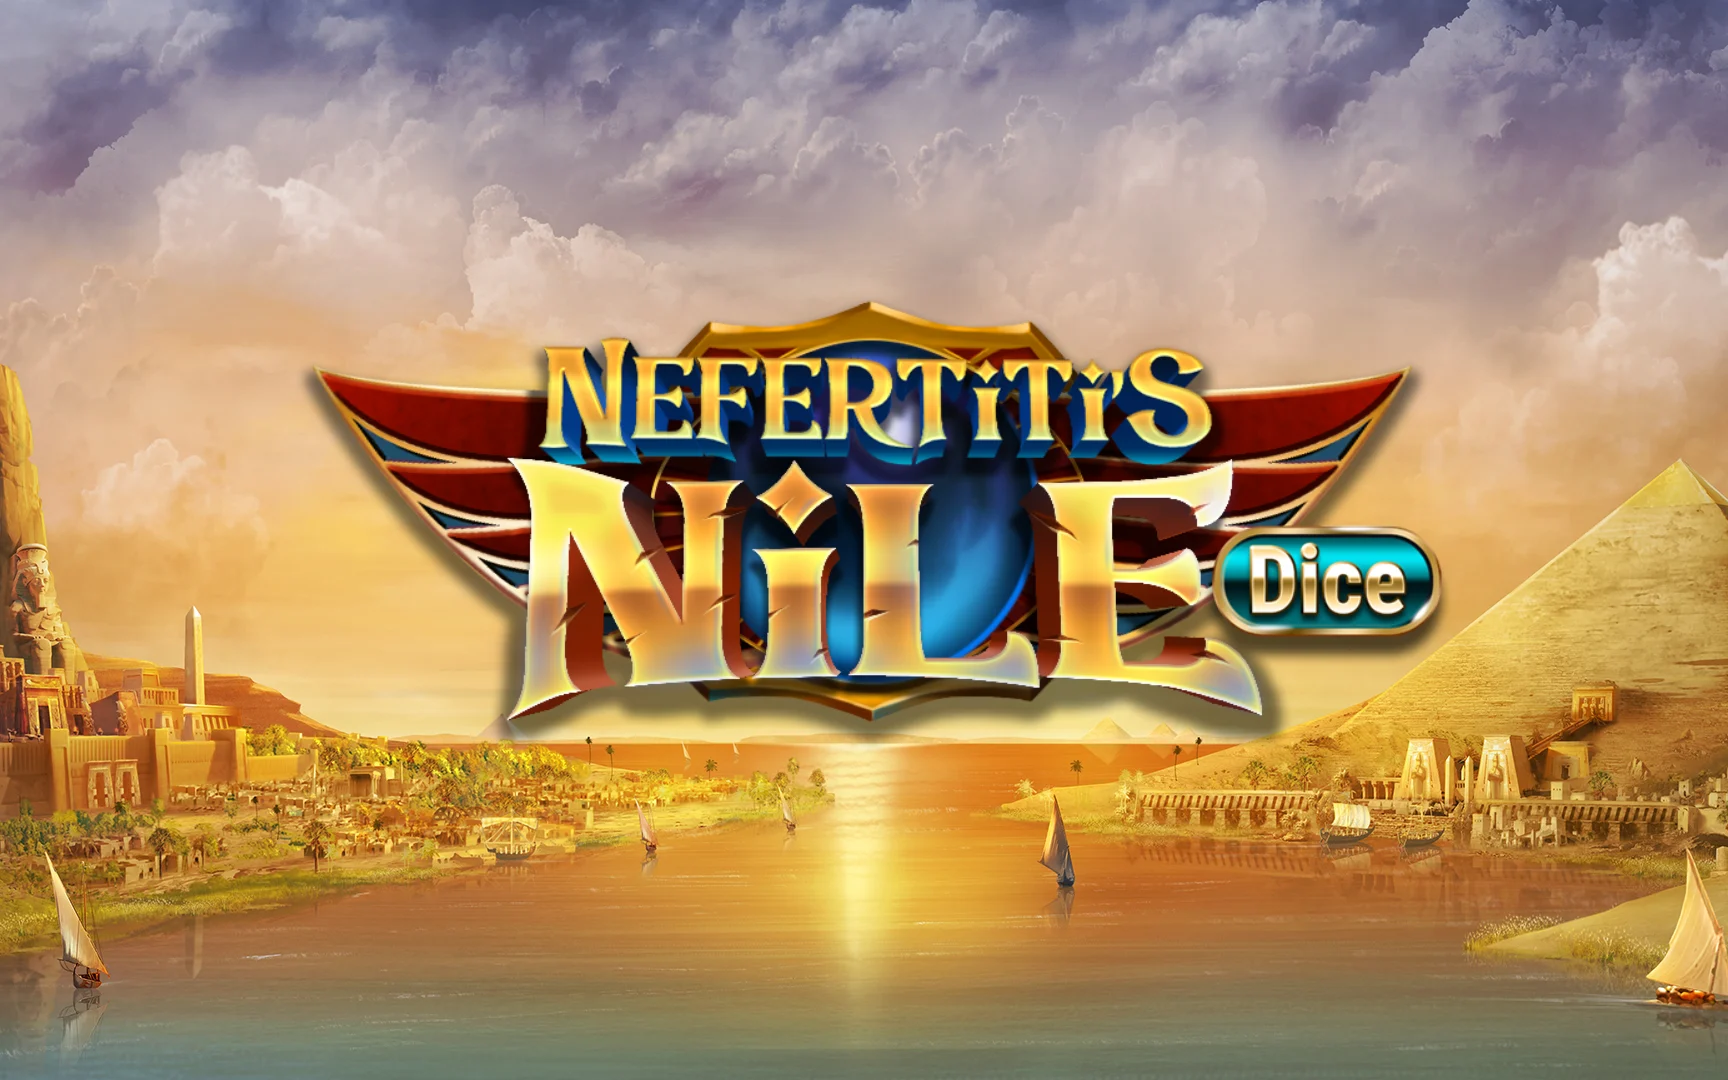 Play Nefertiti's Nile Dice on Starcasino.be online casino